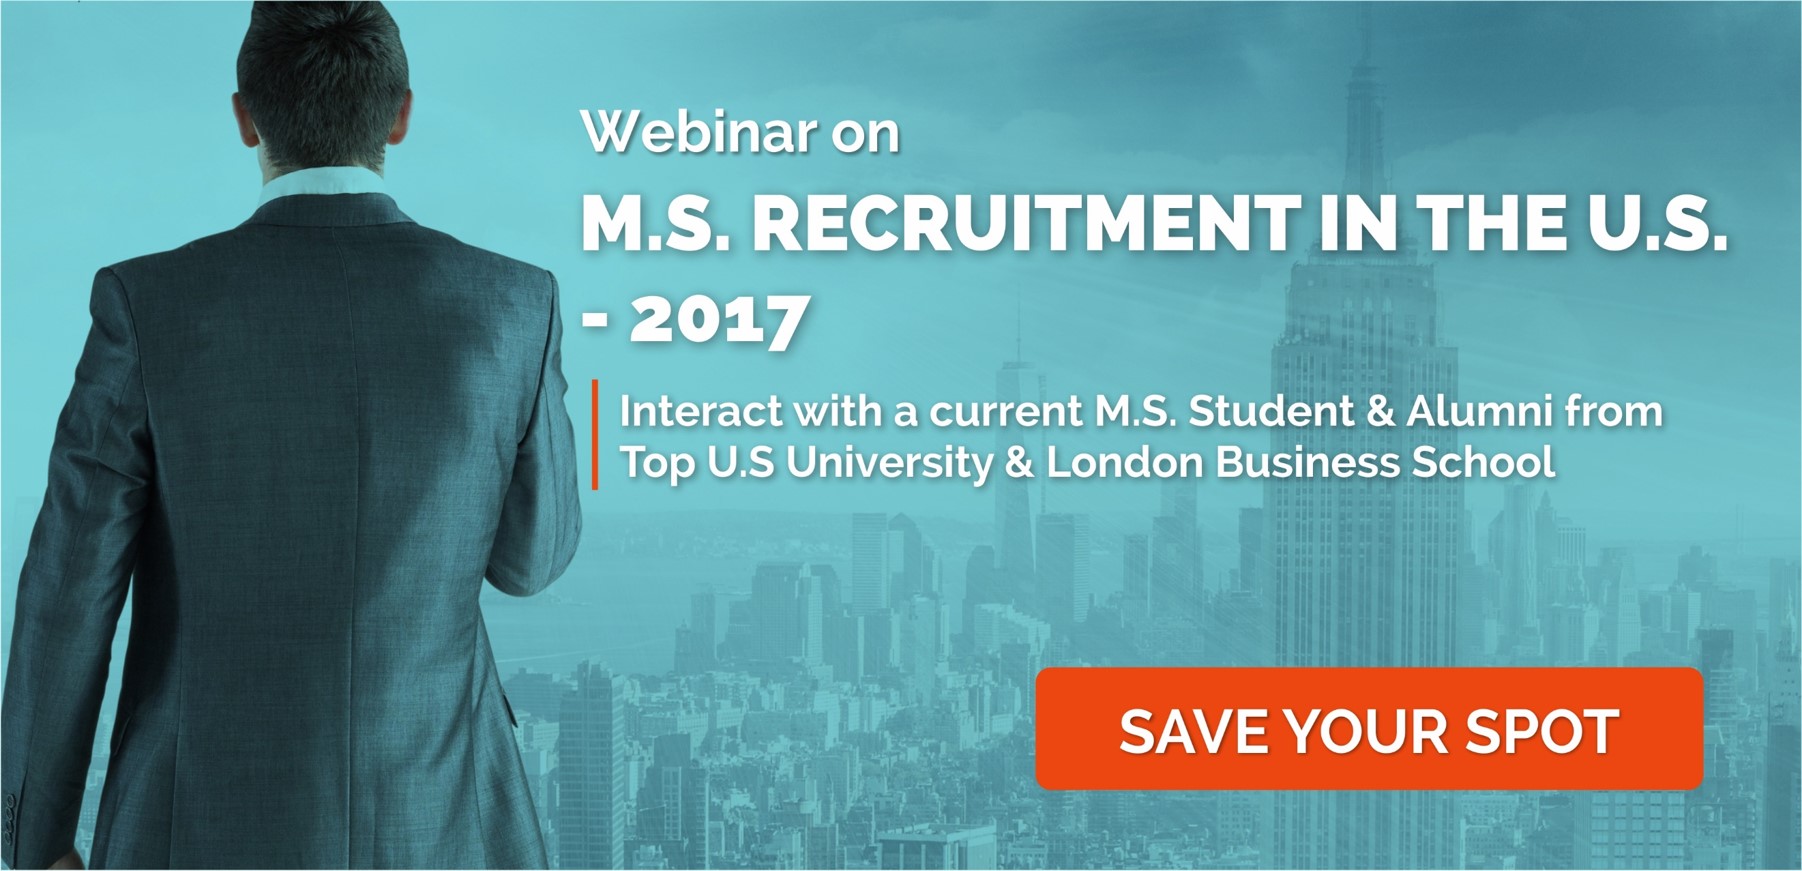 M.S. Recruitment in the U.S. - 2017, Chennai, Tamil Nadu, India